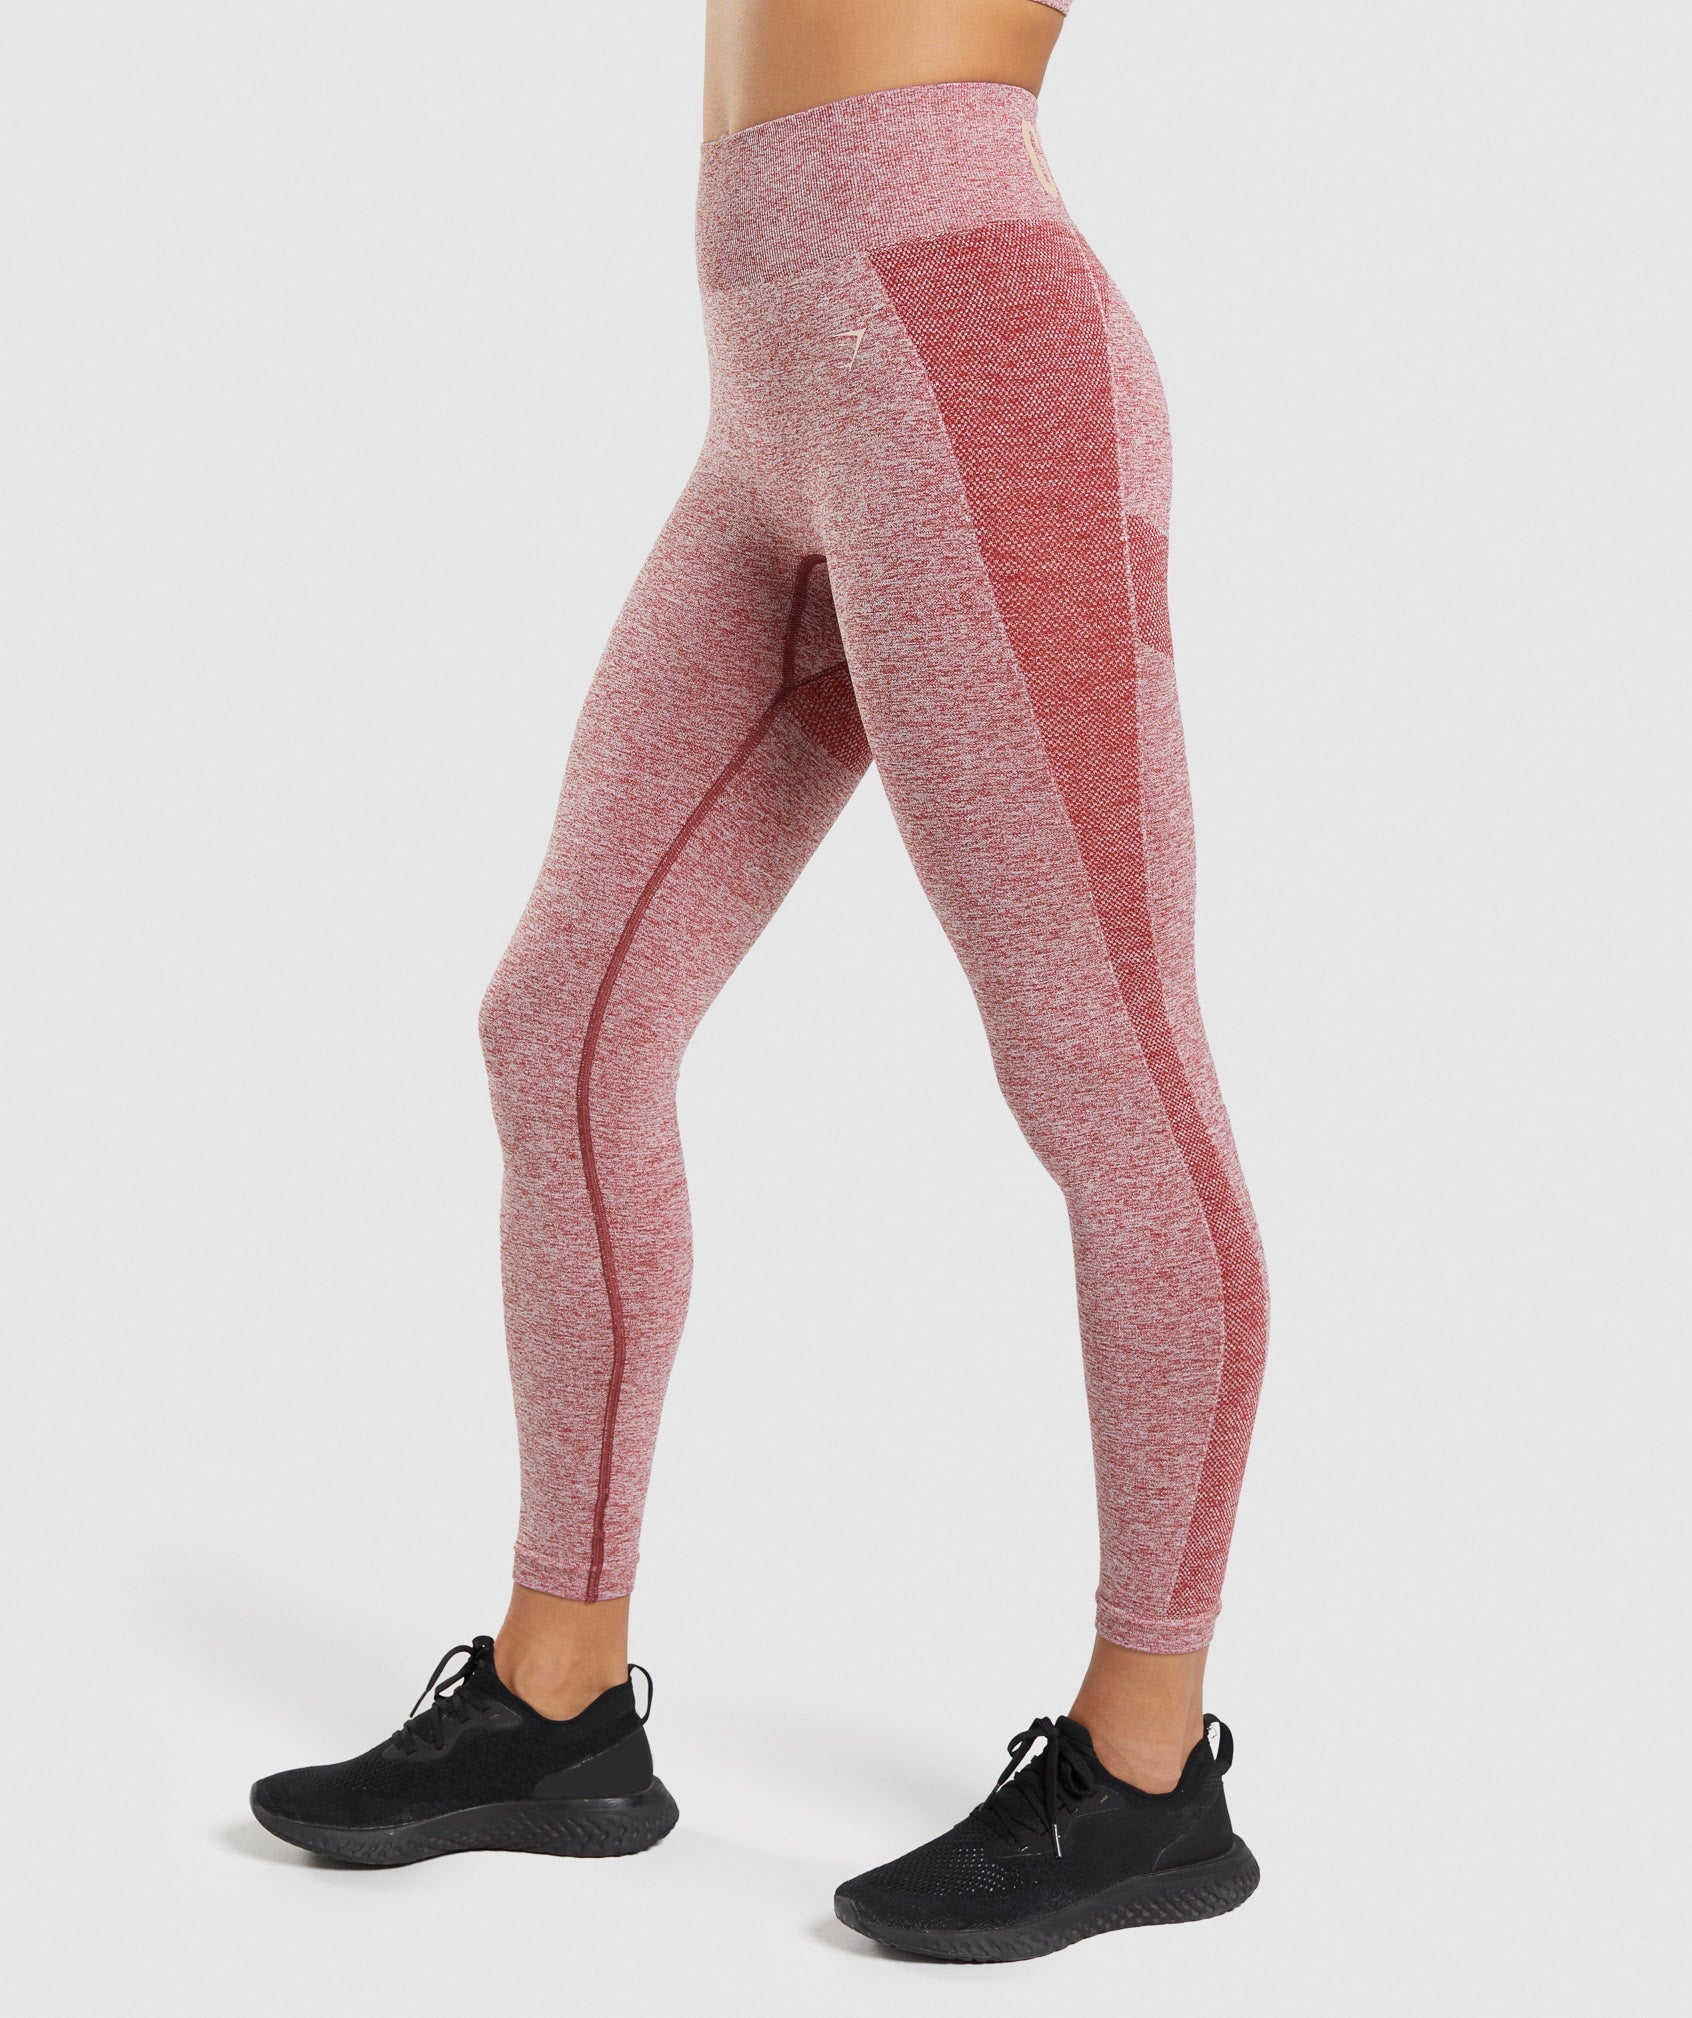 Gymshark Flex Highwaisted Leggings Pink - $18 (64% Off Retail